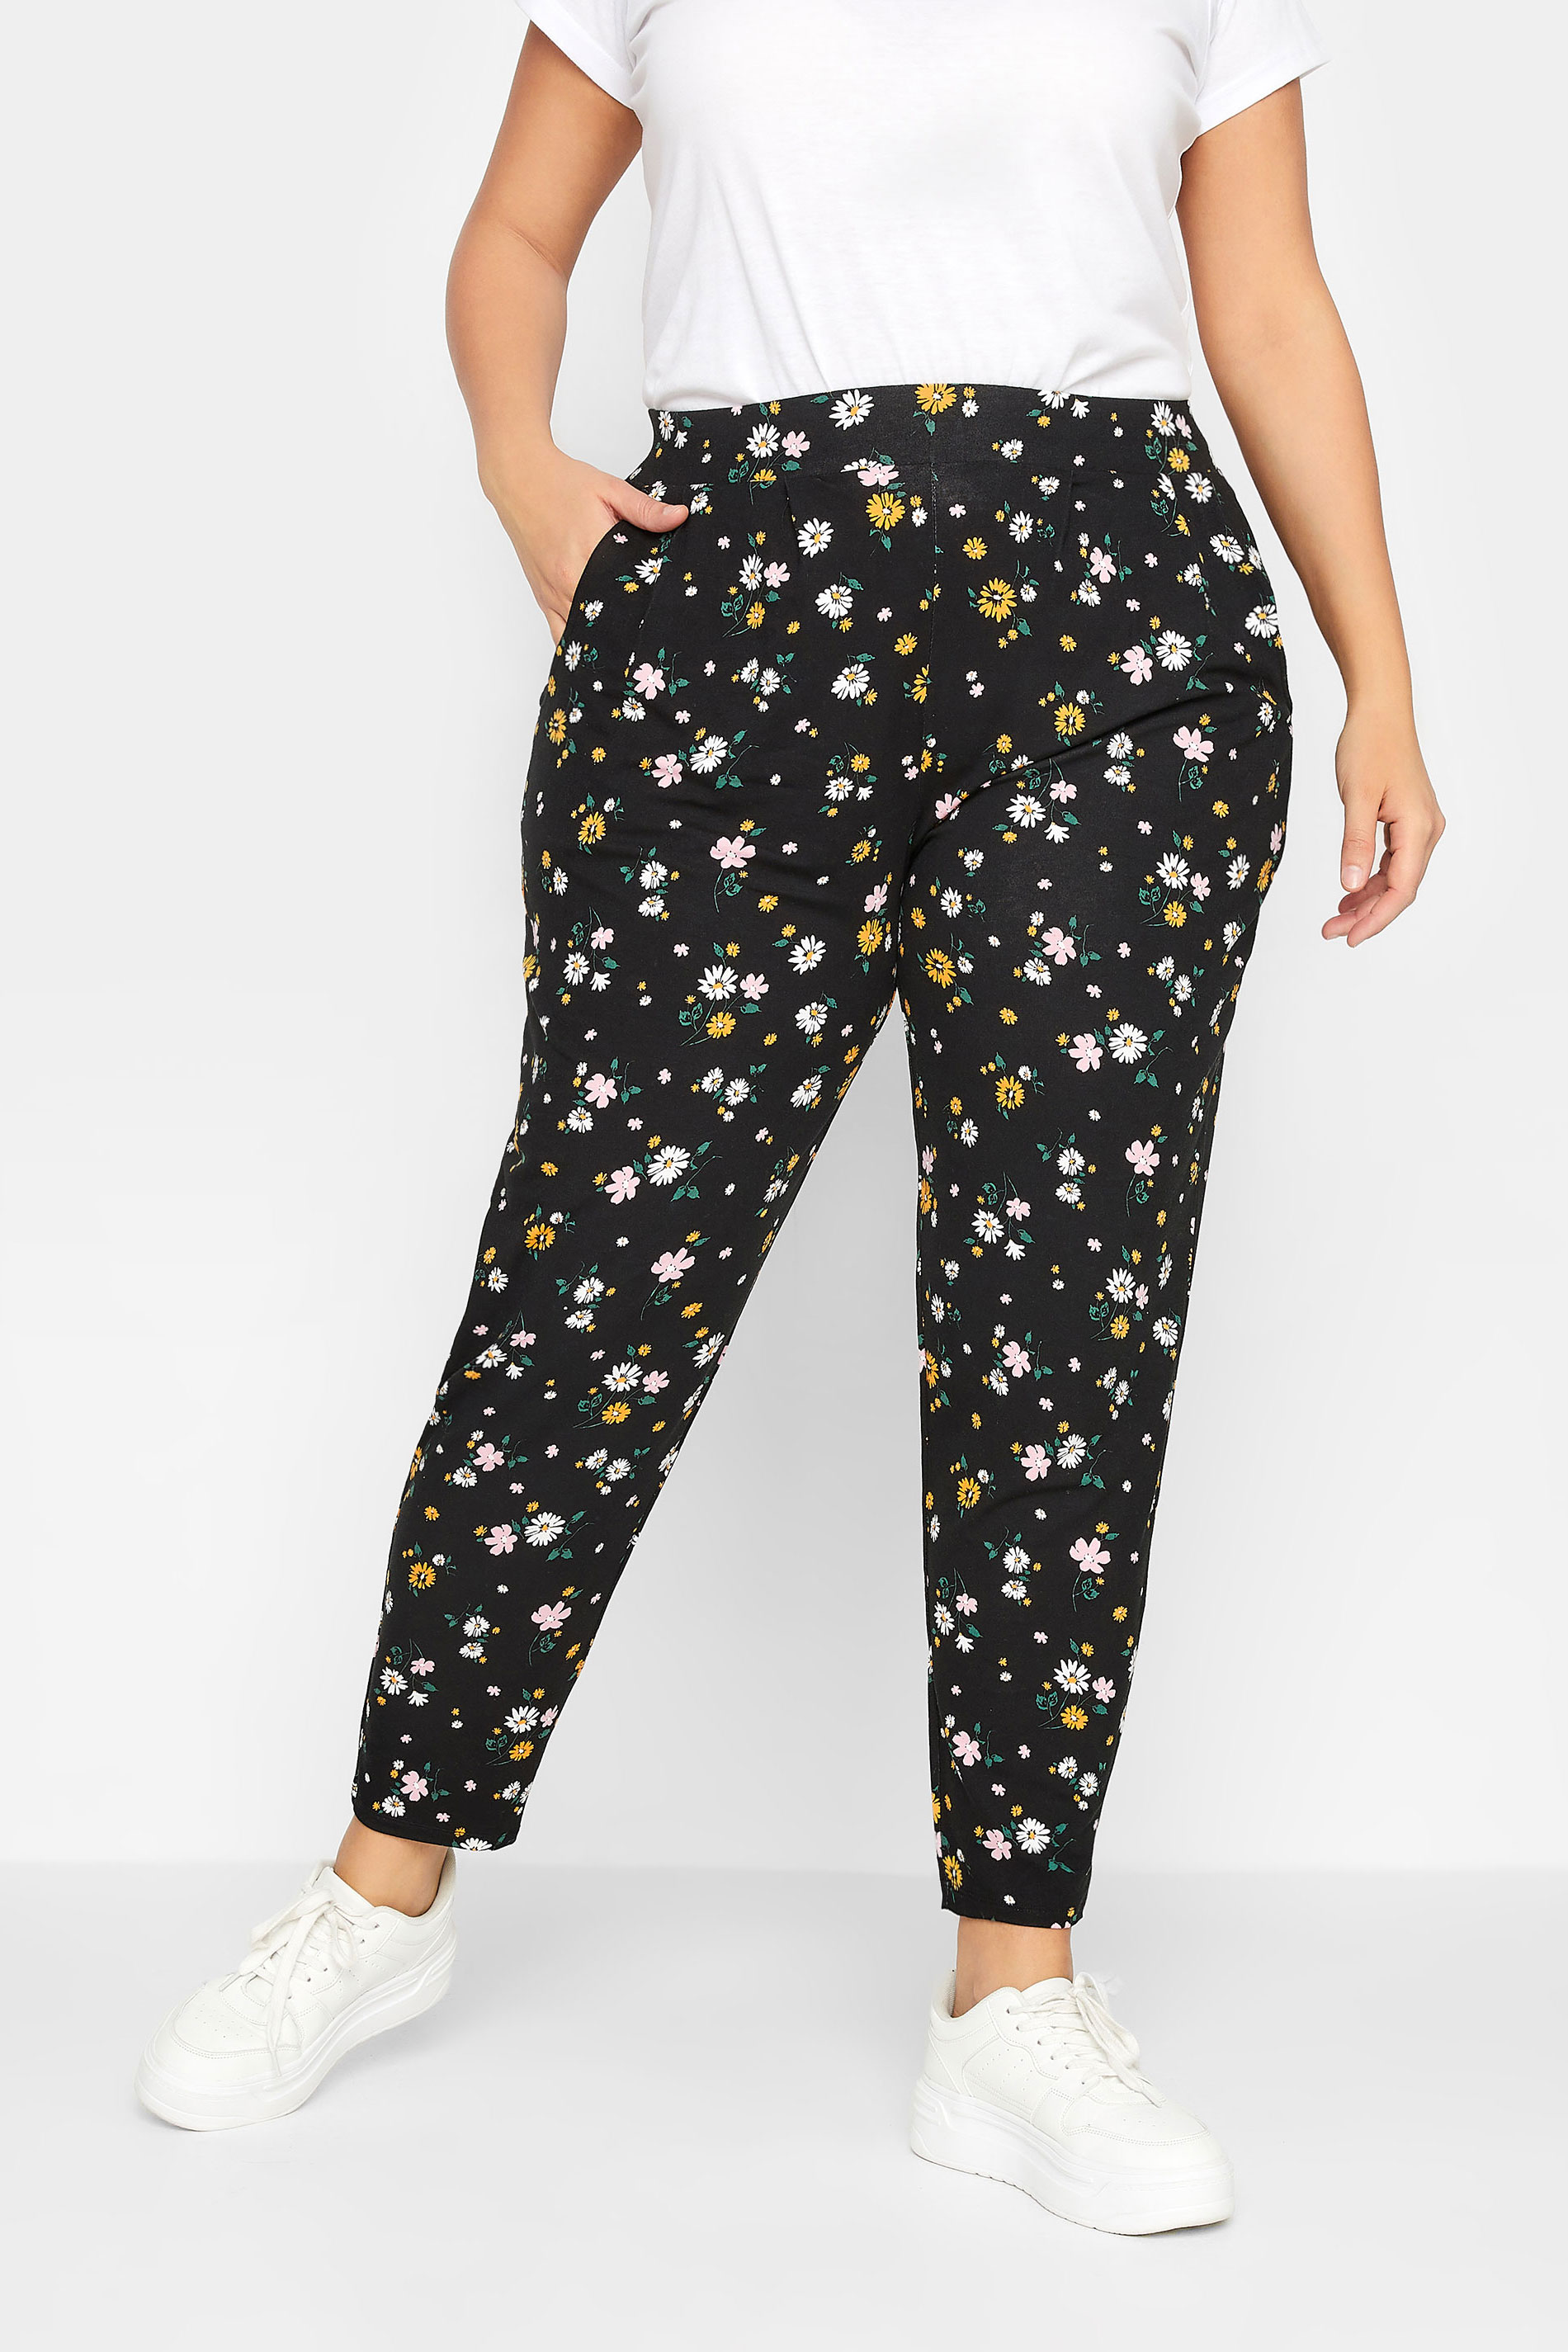 Amazon.com: HGps8w Women's Cotton Linen Harem Pants - Casual Elastic Waist  Summer Baggy Pants - Loose Comfy Lounge Trousers with Pockets : Clothing,  Shoes & Jewelry